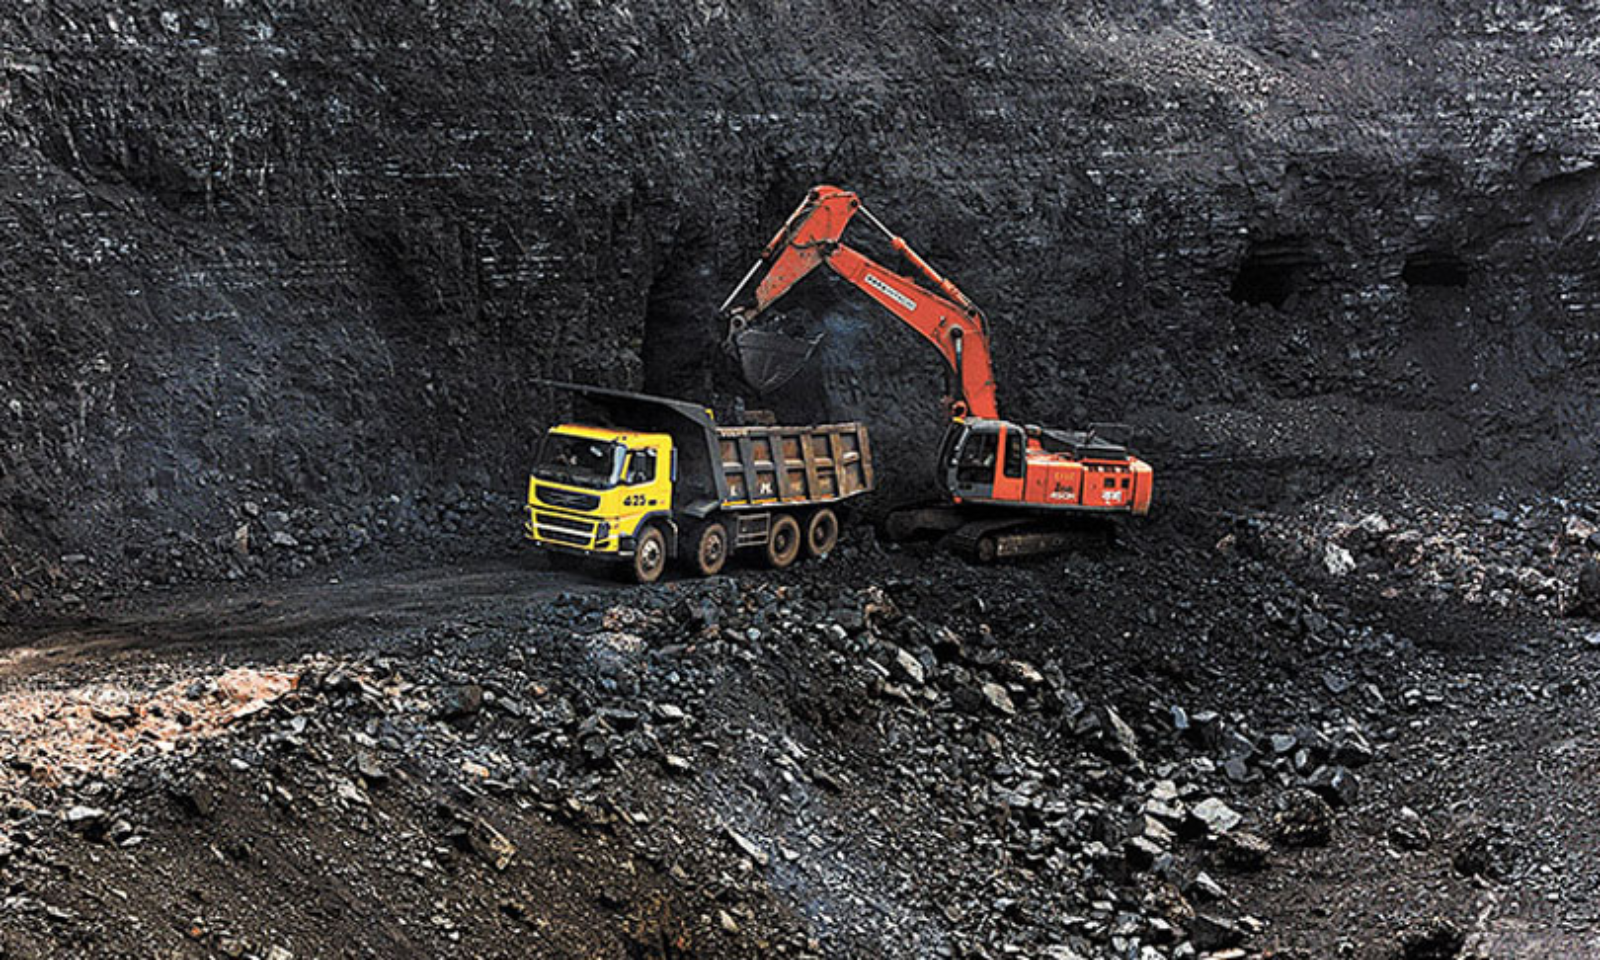  Coal production